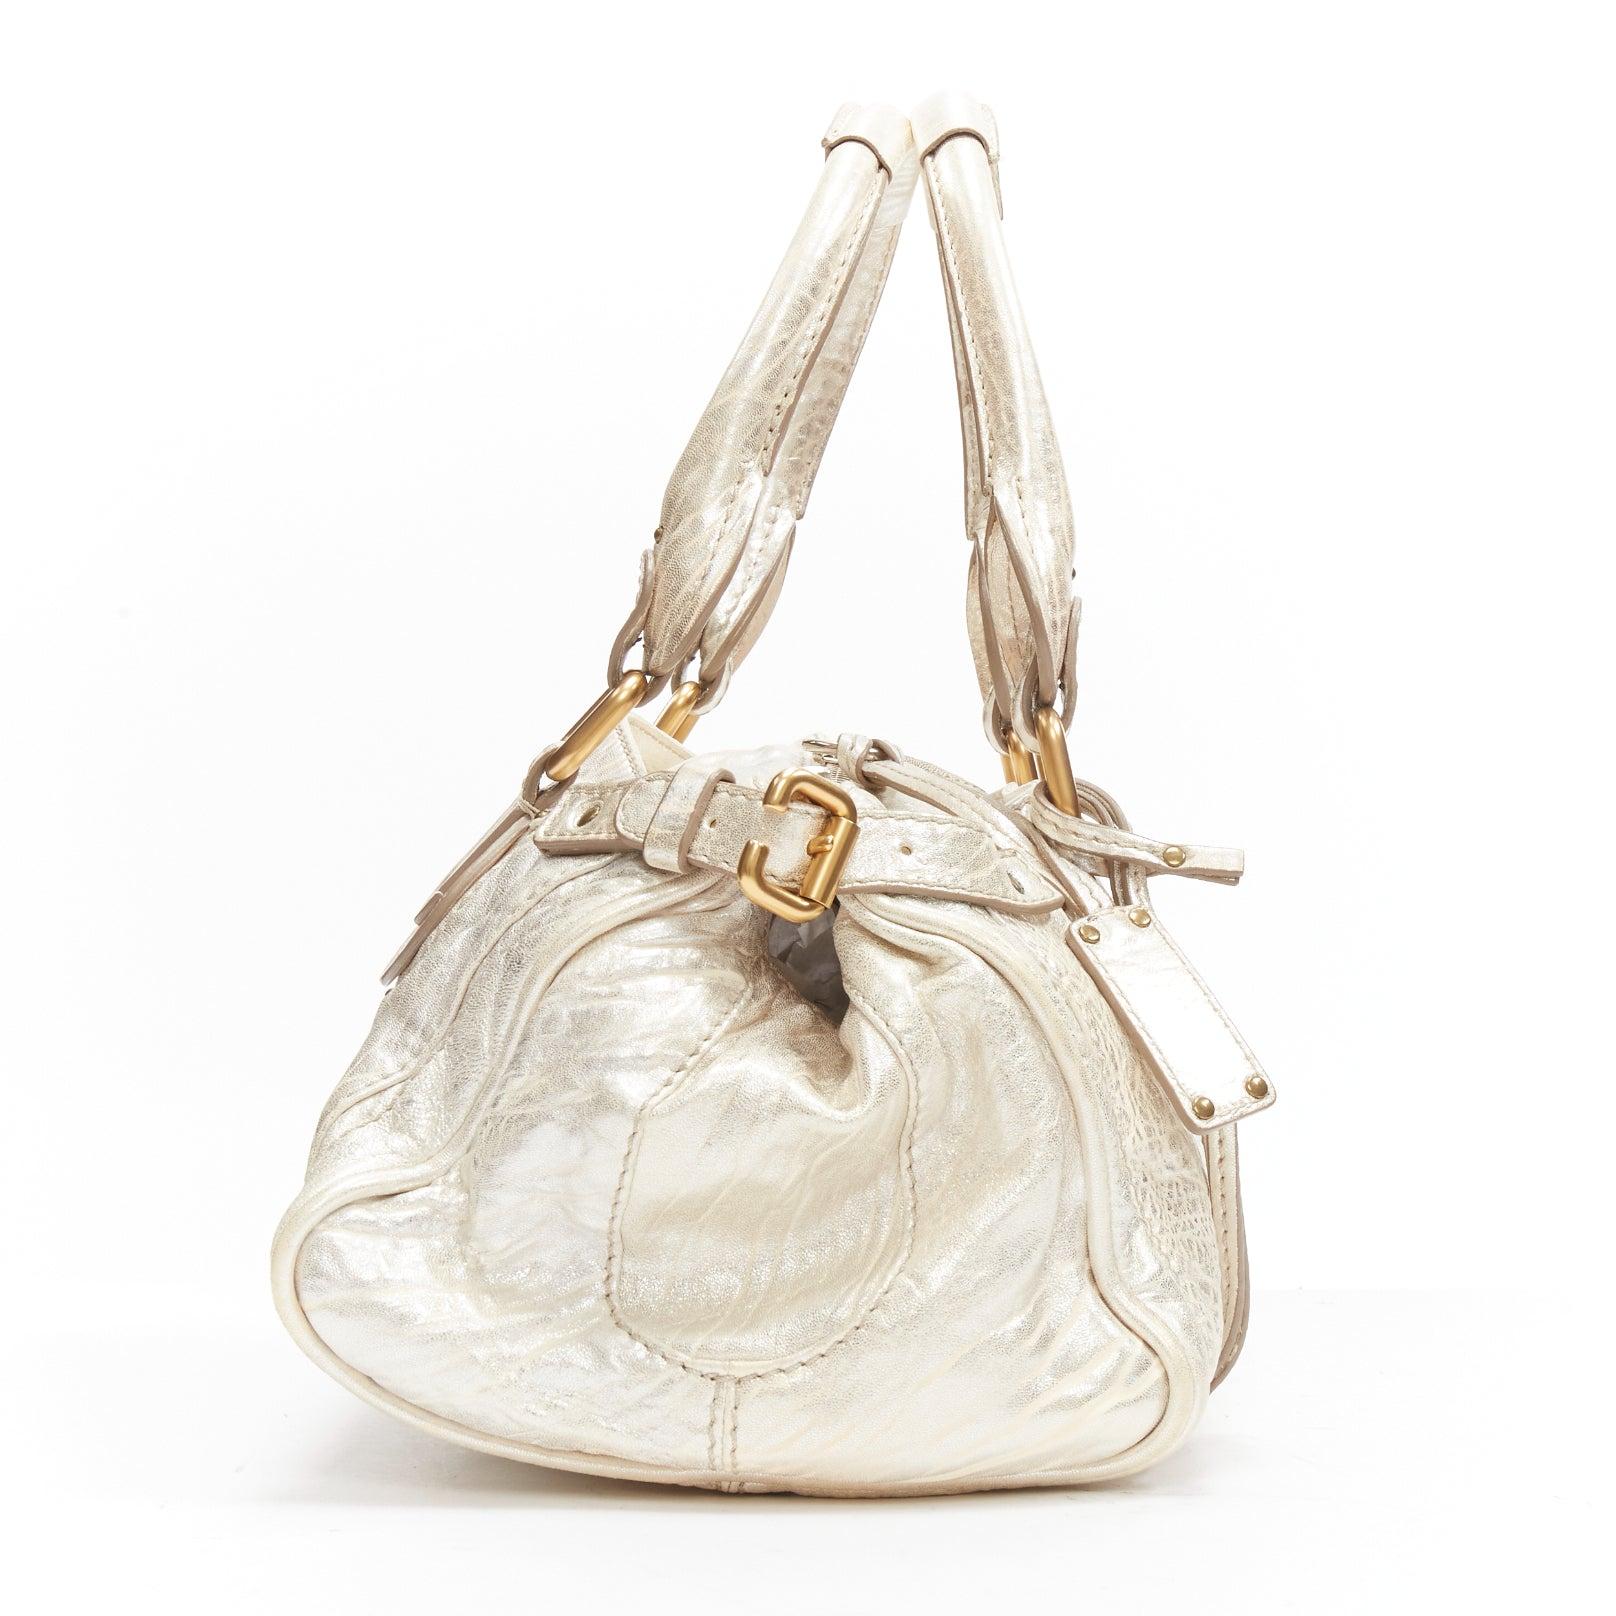 Women's CHLOE Paddington metallic silver leather gold padlock satchel shoulder bag